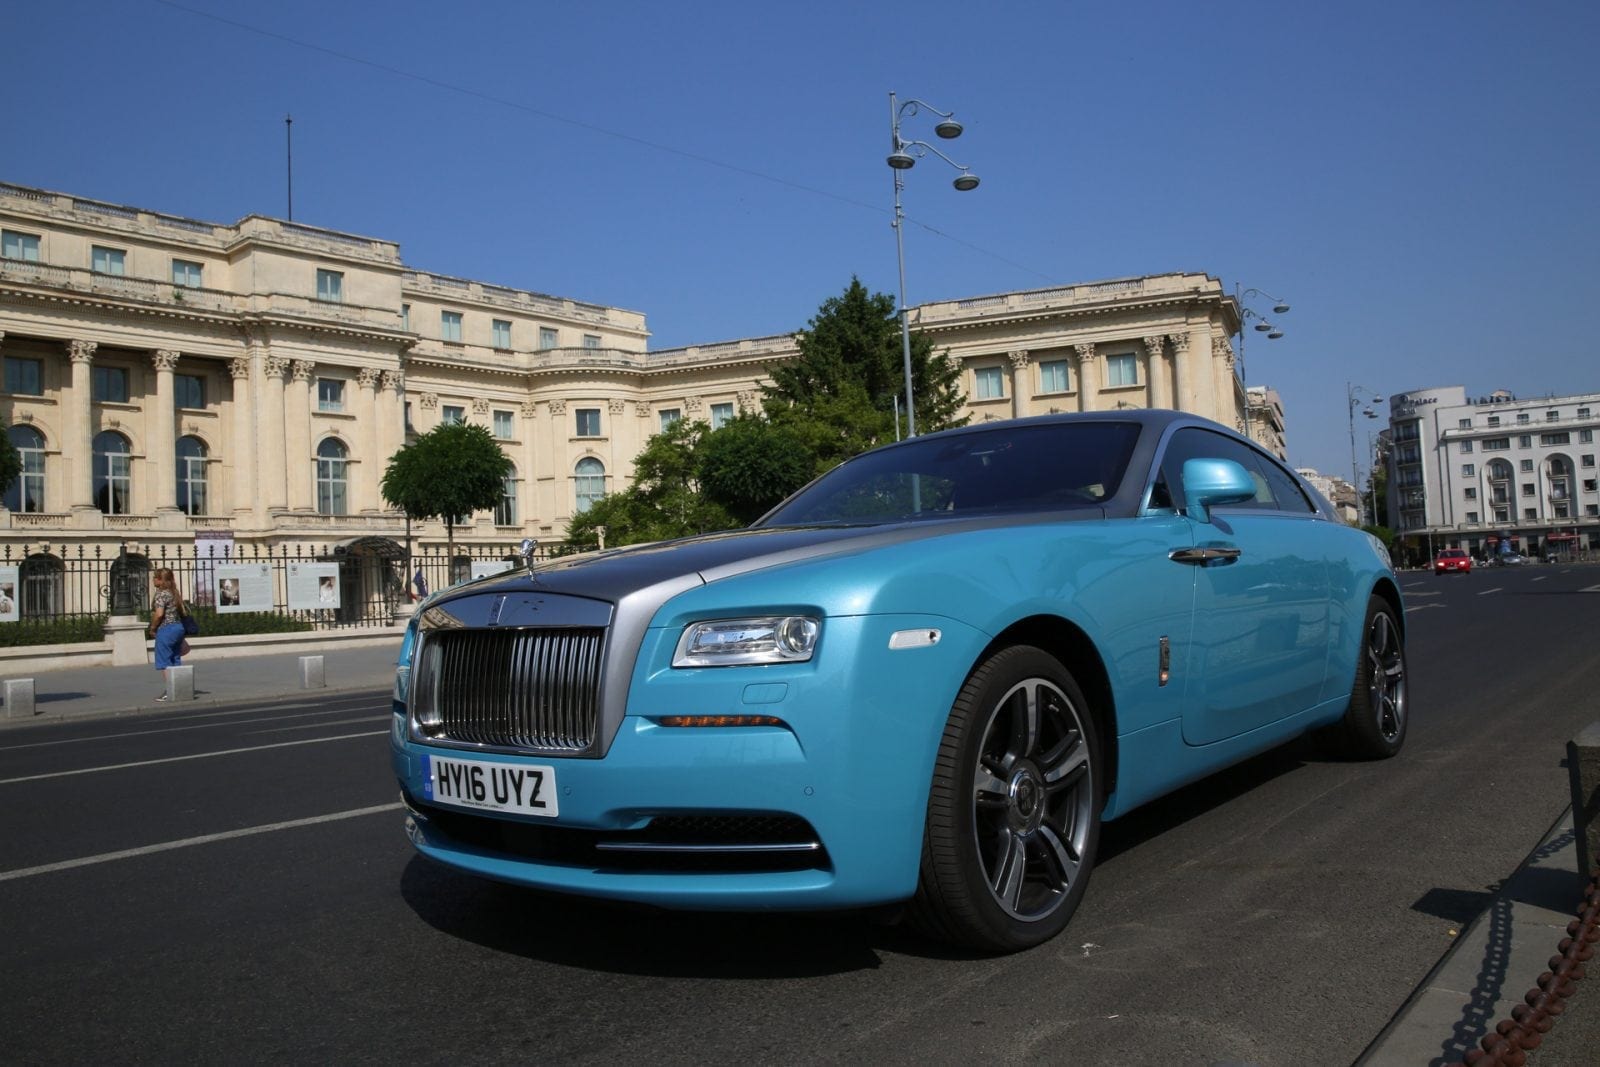 Rolls-Royce Motor Cars Ltd